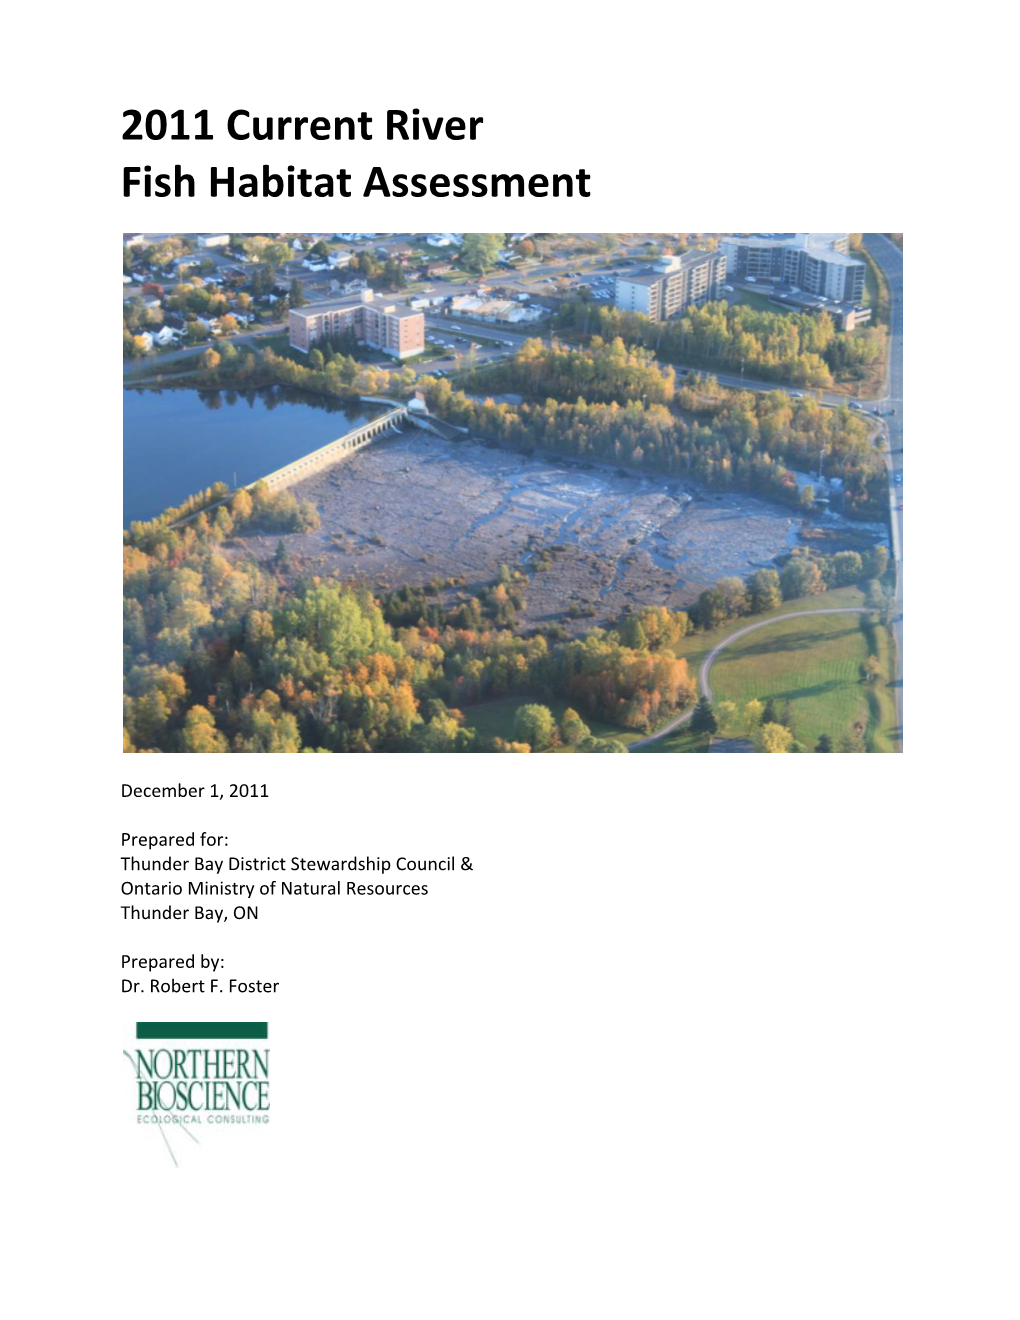 2011 Current River Fish Habitat Assessment Final.Pdf